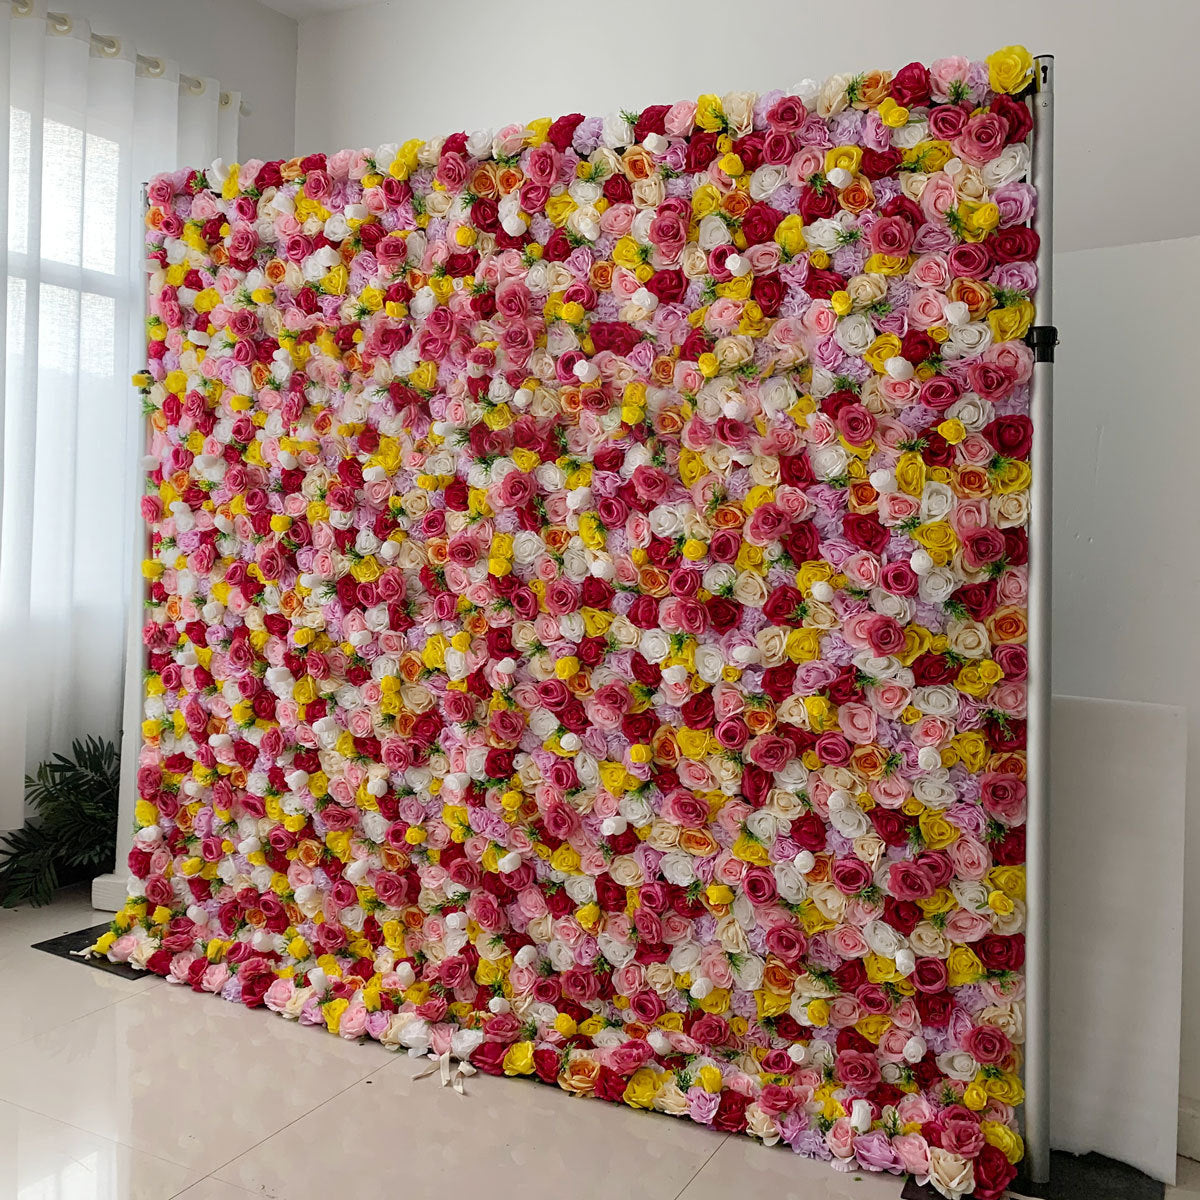 3D Artificial Flower Wall Arrangement Wedding Party Birthday Backdrop Decor HQ1153